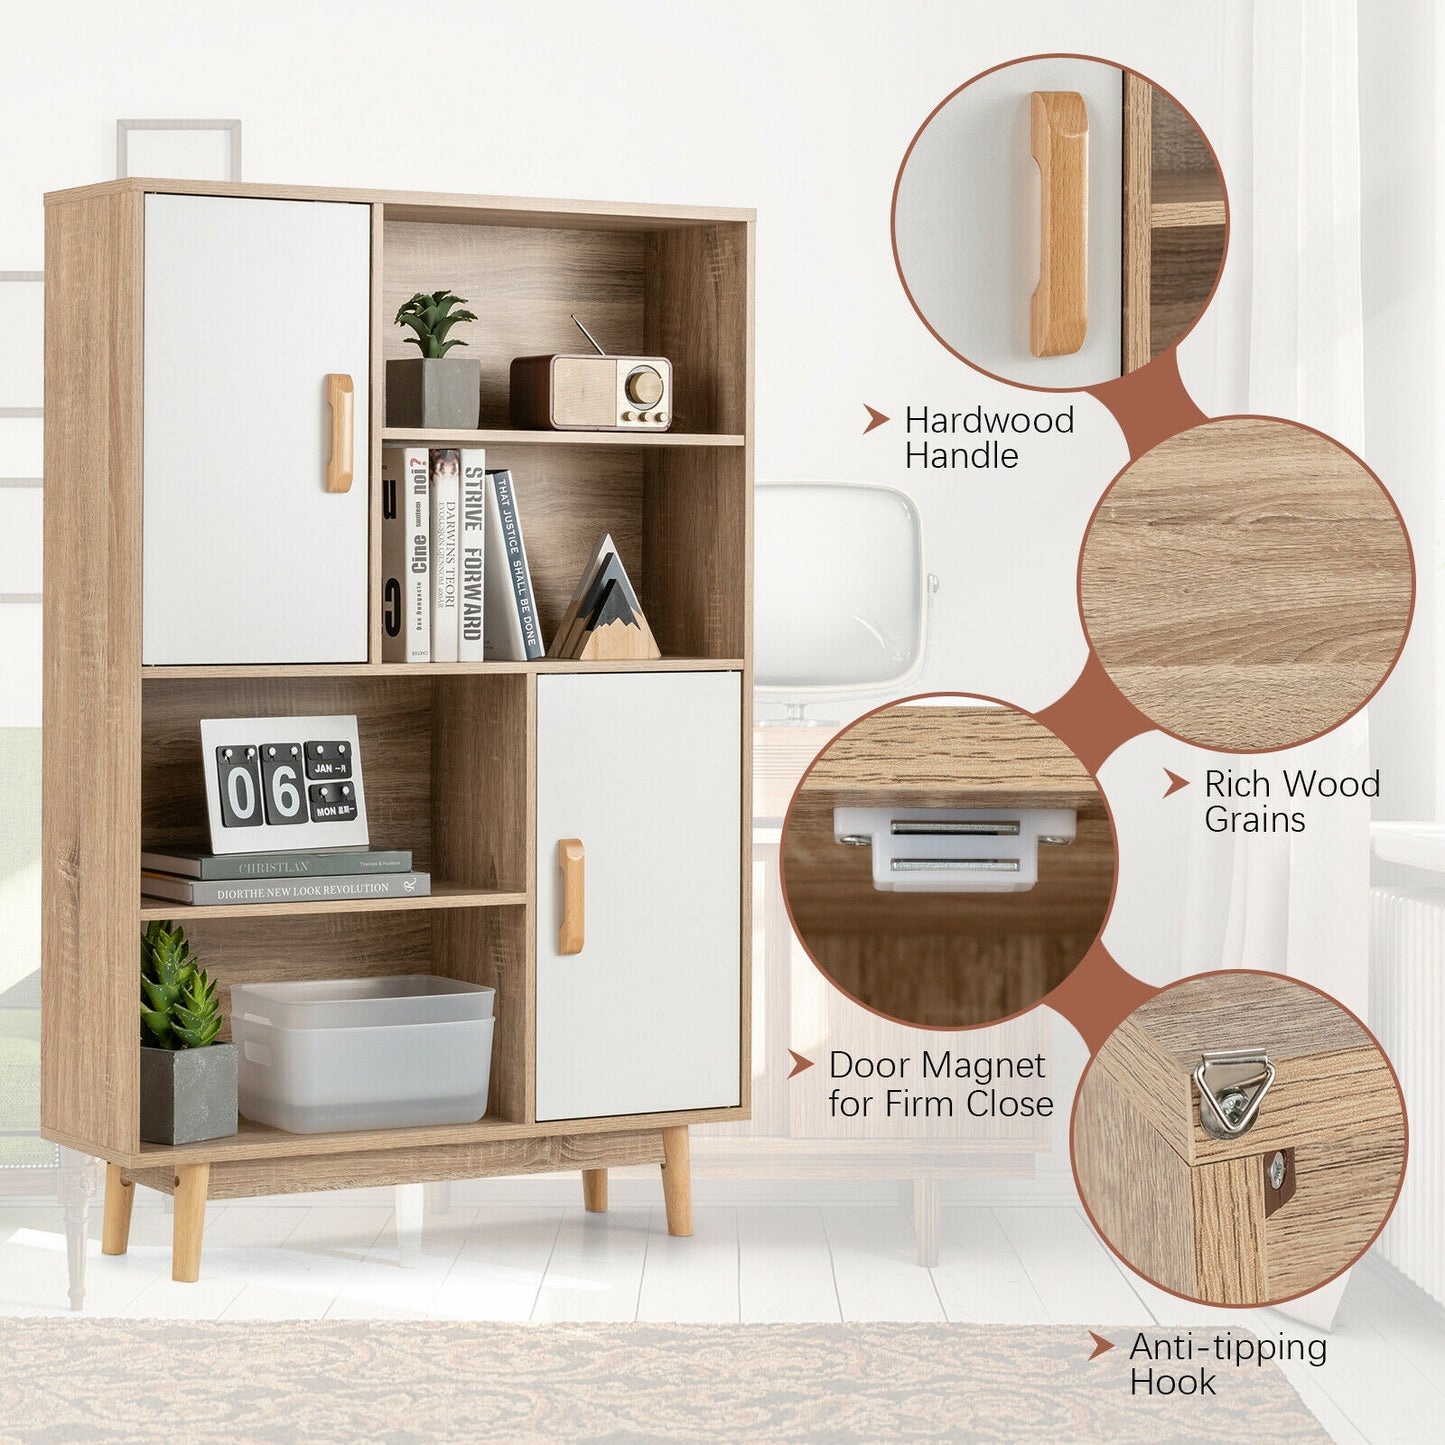 Sideboard Storage Cabinet with Door Shelf-White